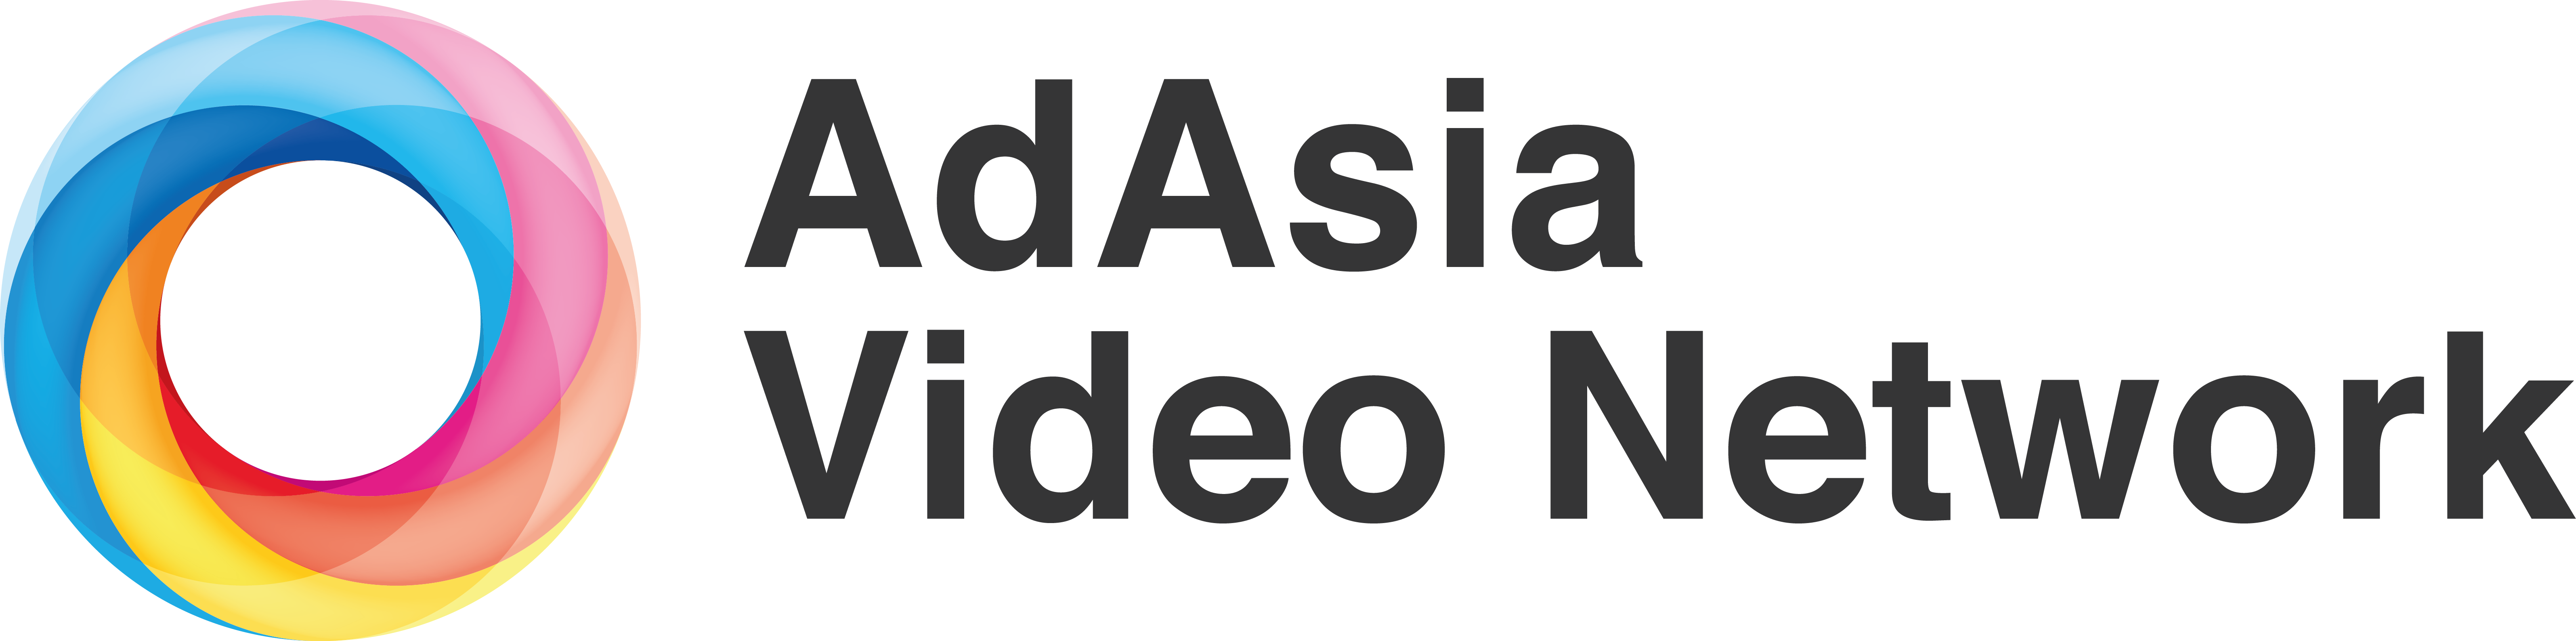 AdAsia Video Network Logo